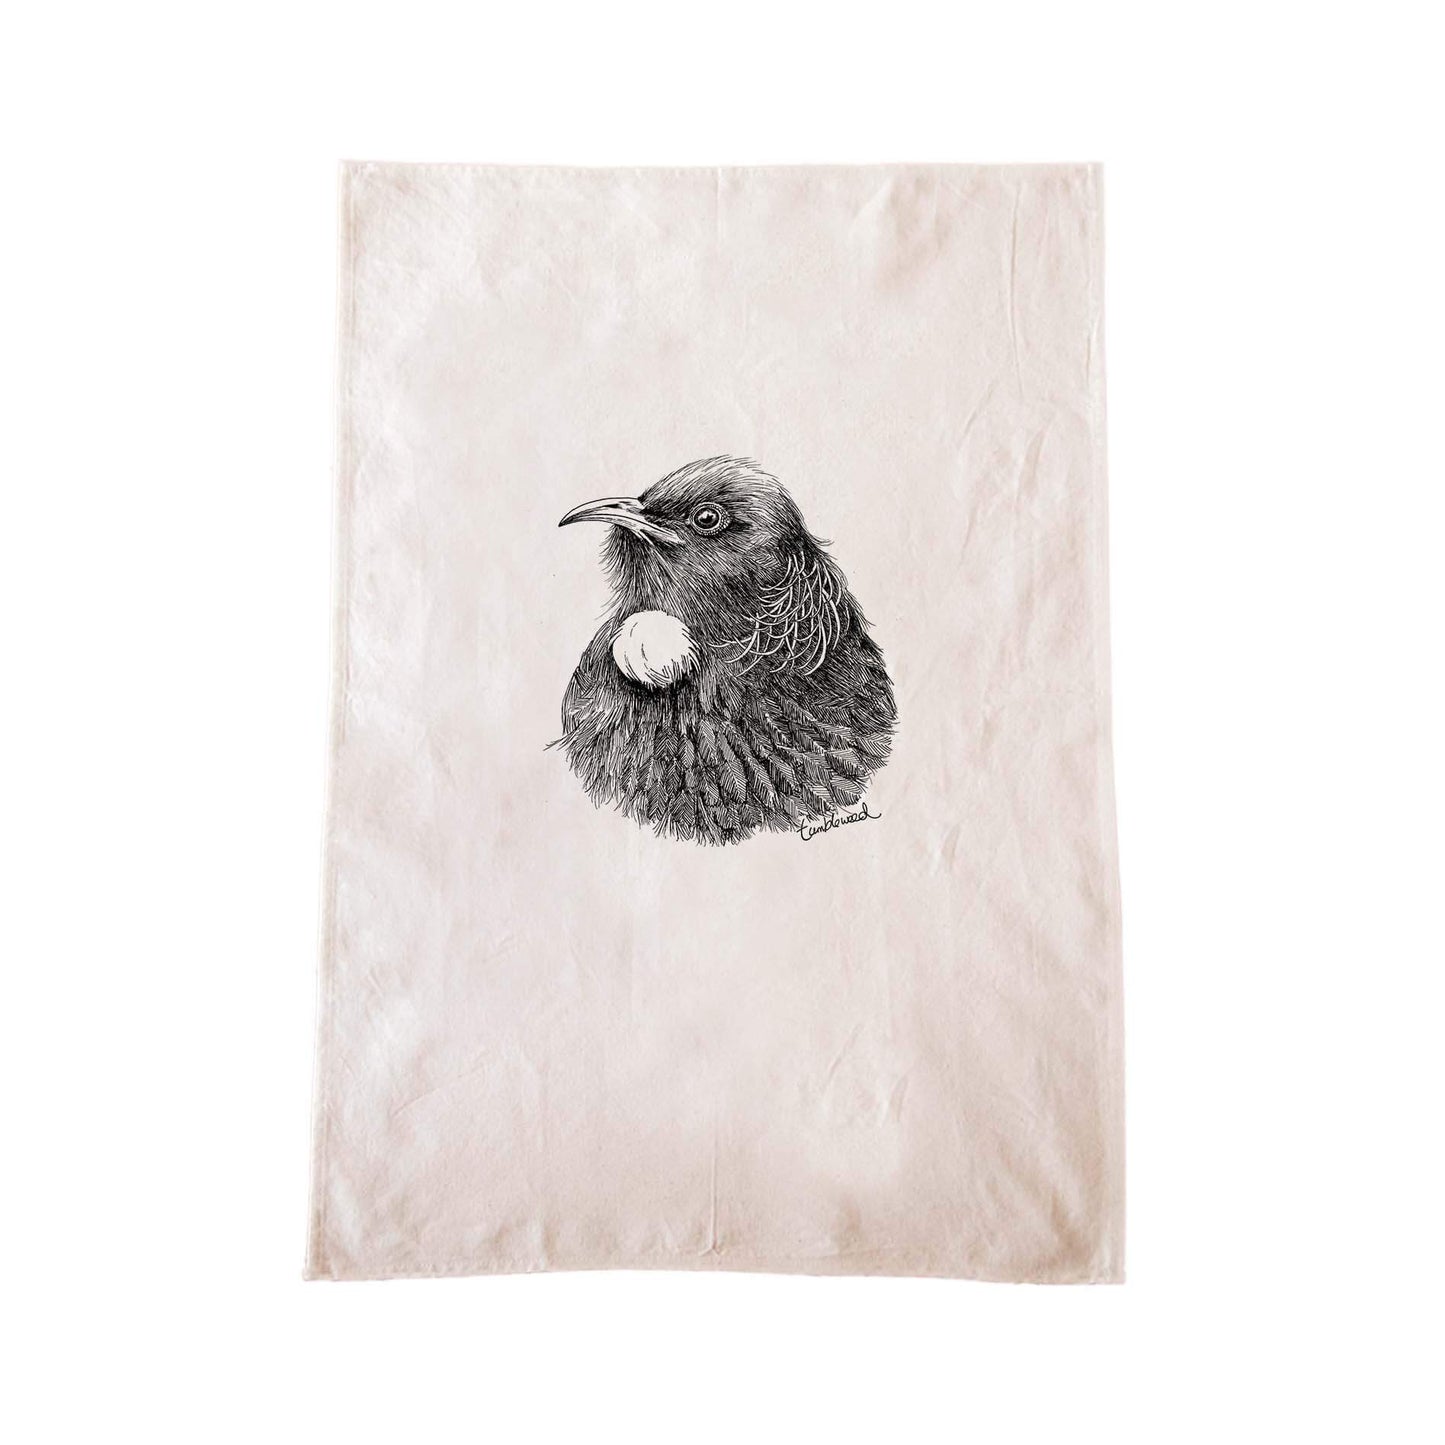 Off-white cotton tea towel with a screen printed Tui design.